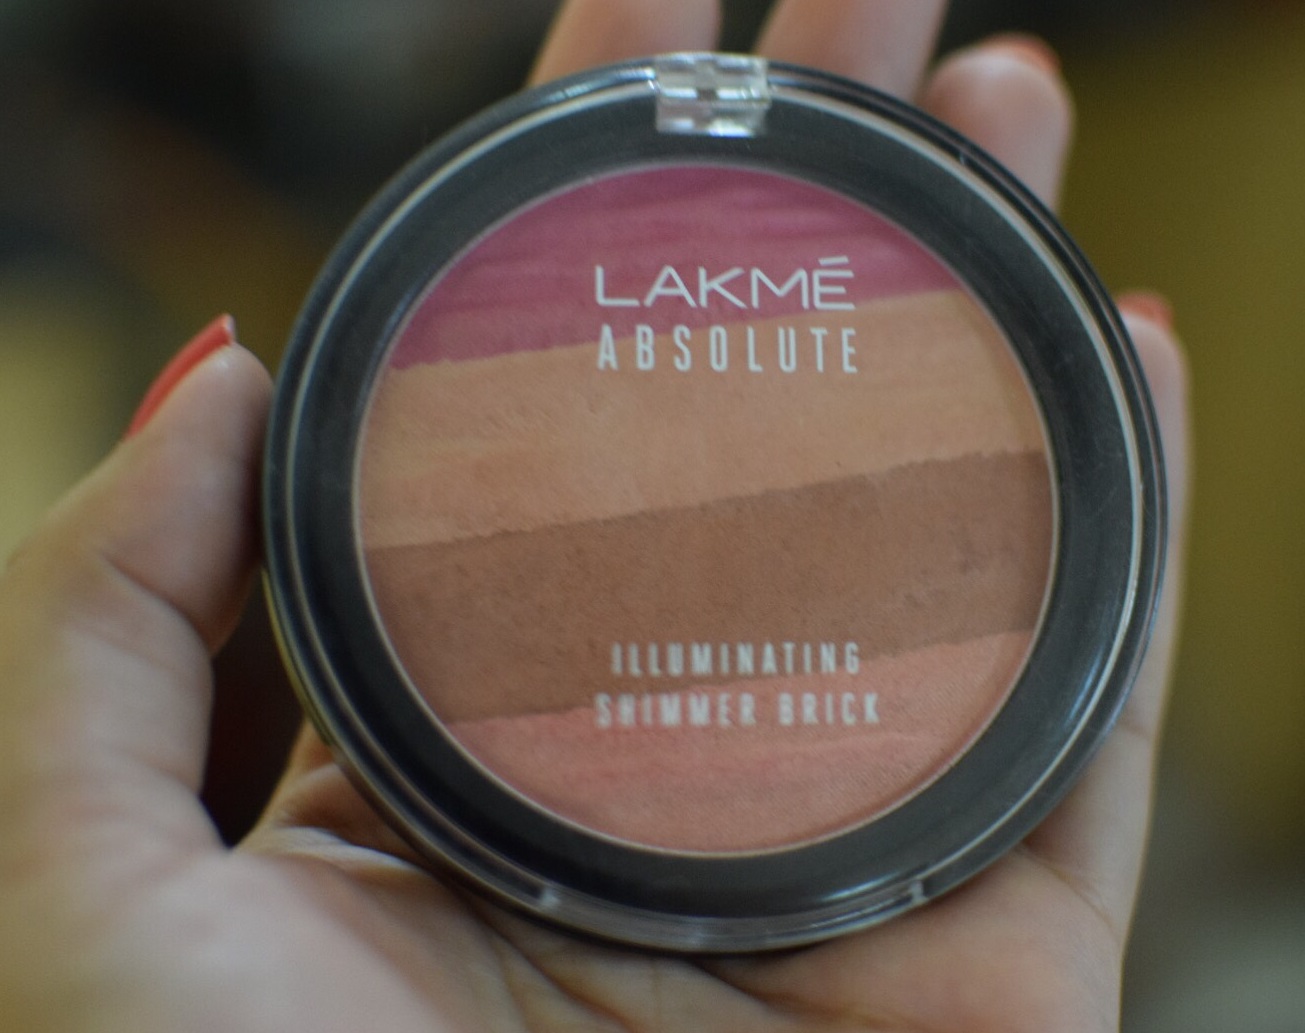 Lakme Absolute Illuminating Blush Shimmer Brick